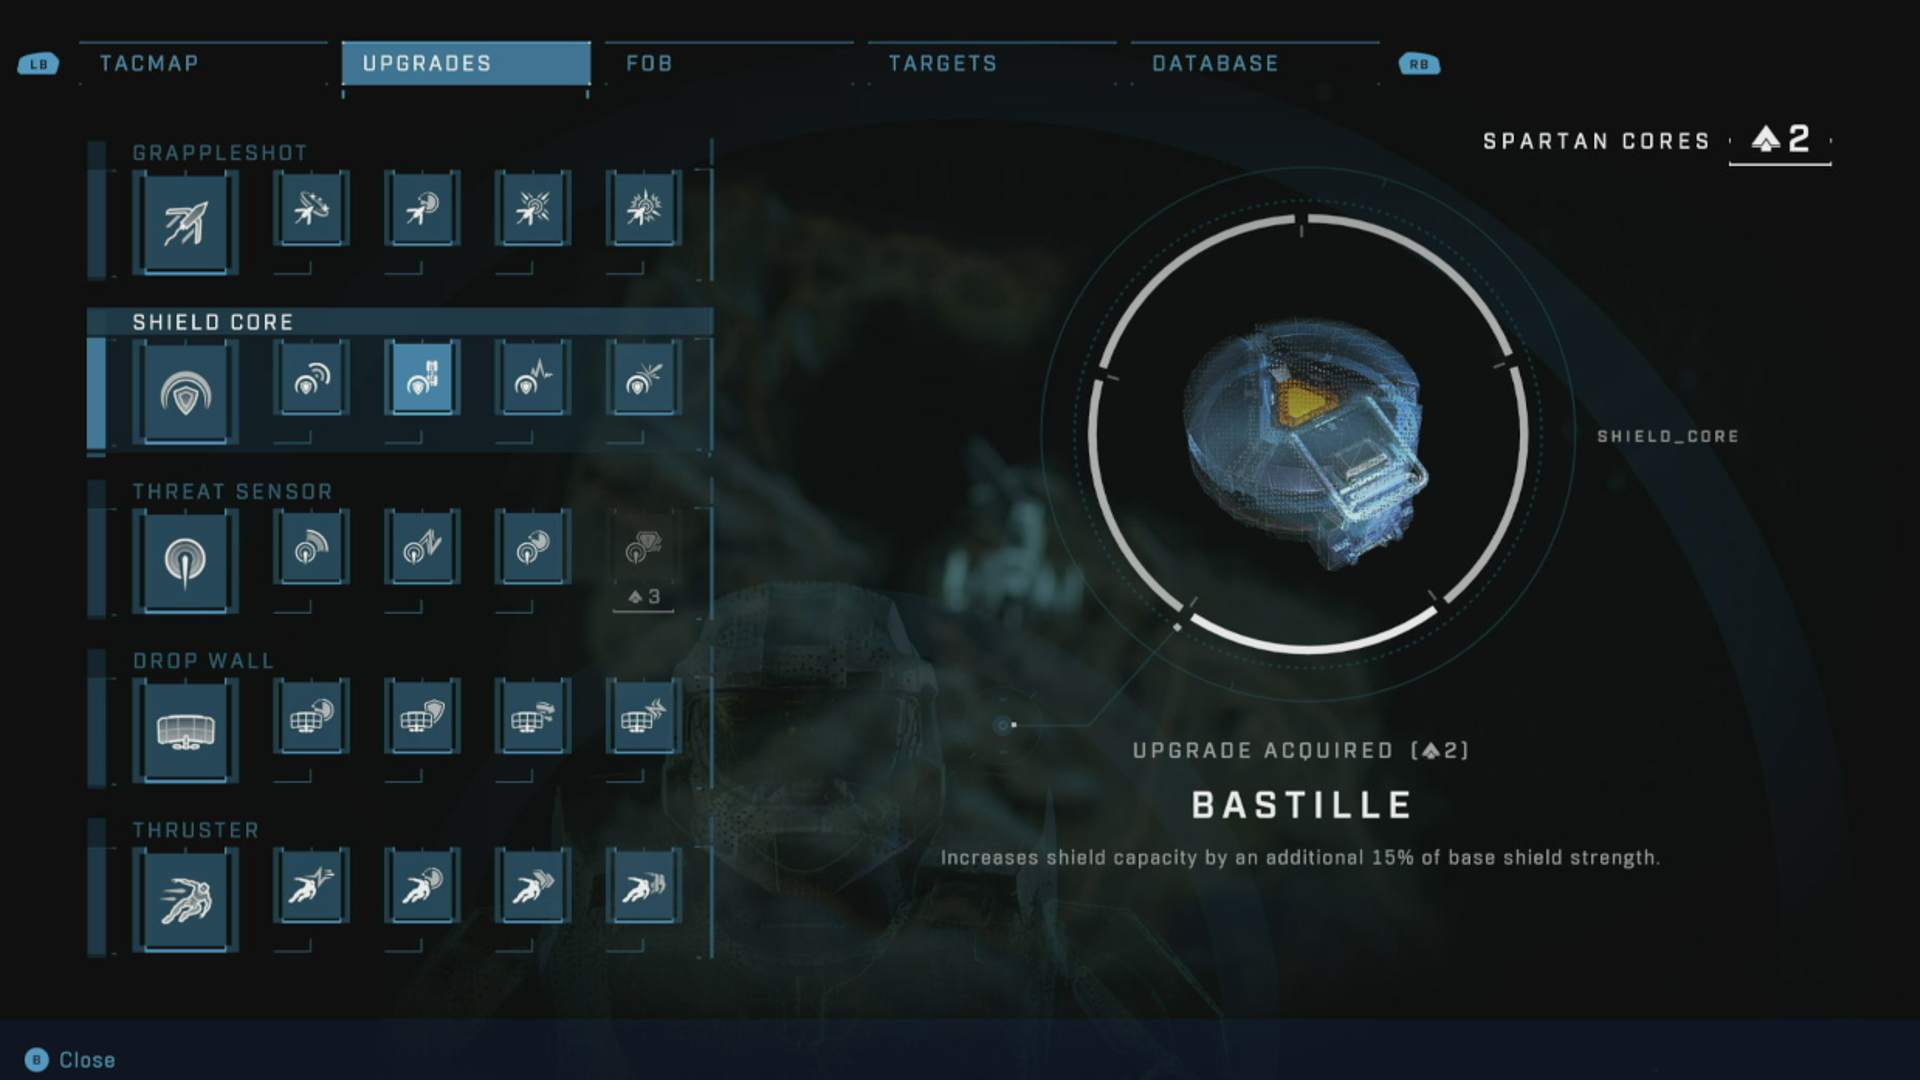 Halo Infinite Best Upgrades: The menu showing the Bastille upgrade.